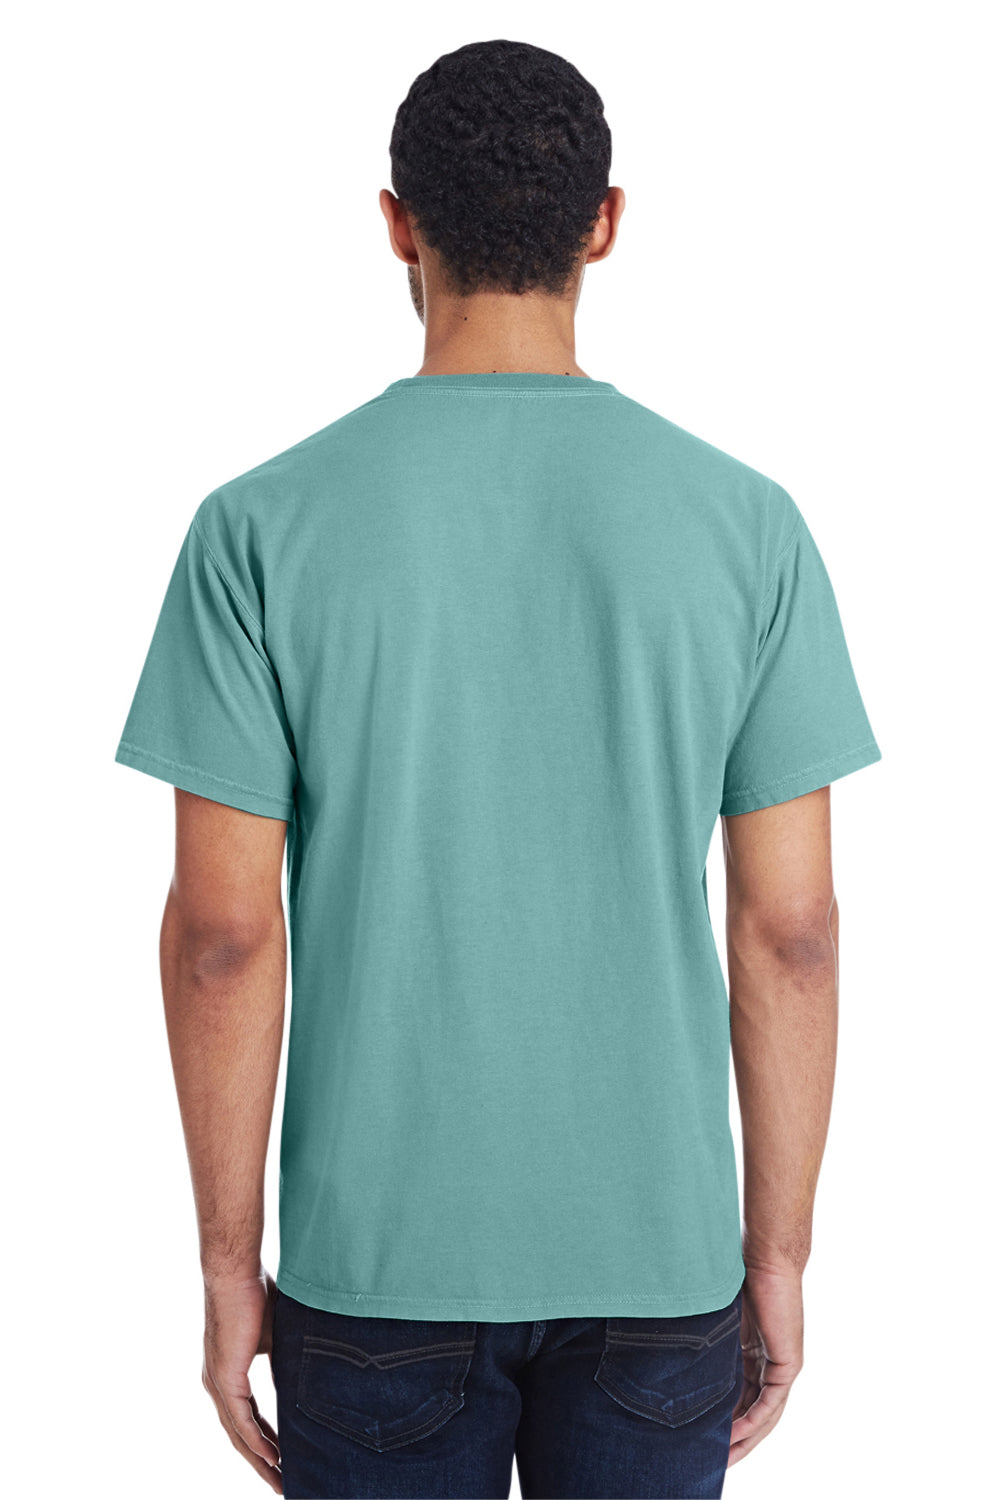 ComfortWash by Hanes GDH150 Short Sleeve Crewneck T-Shirt w/ Pocket Spanish Moss Green Back